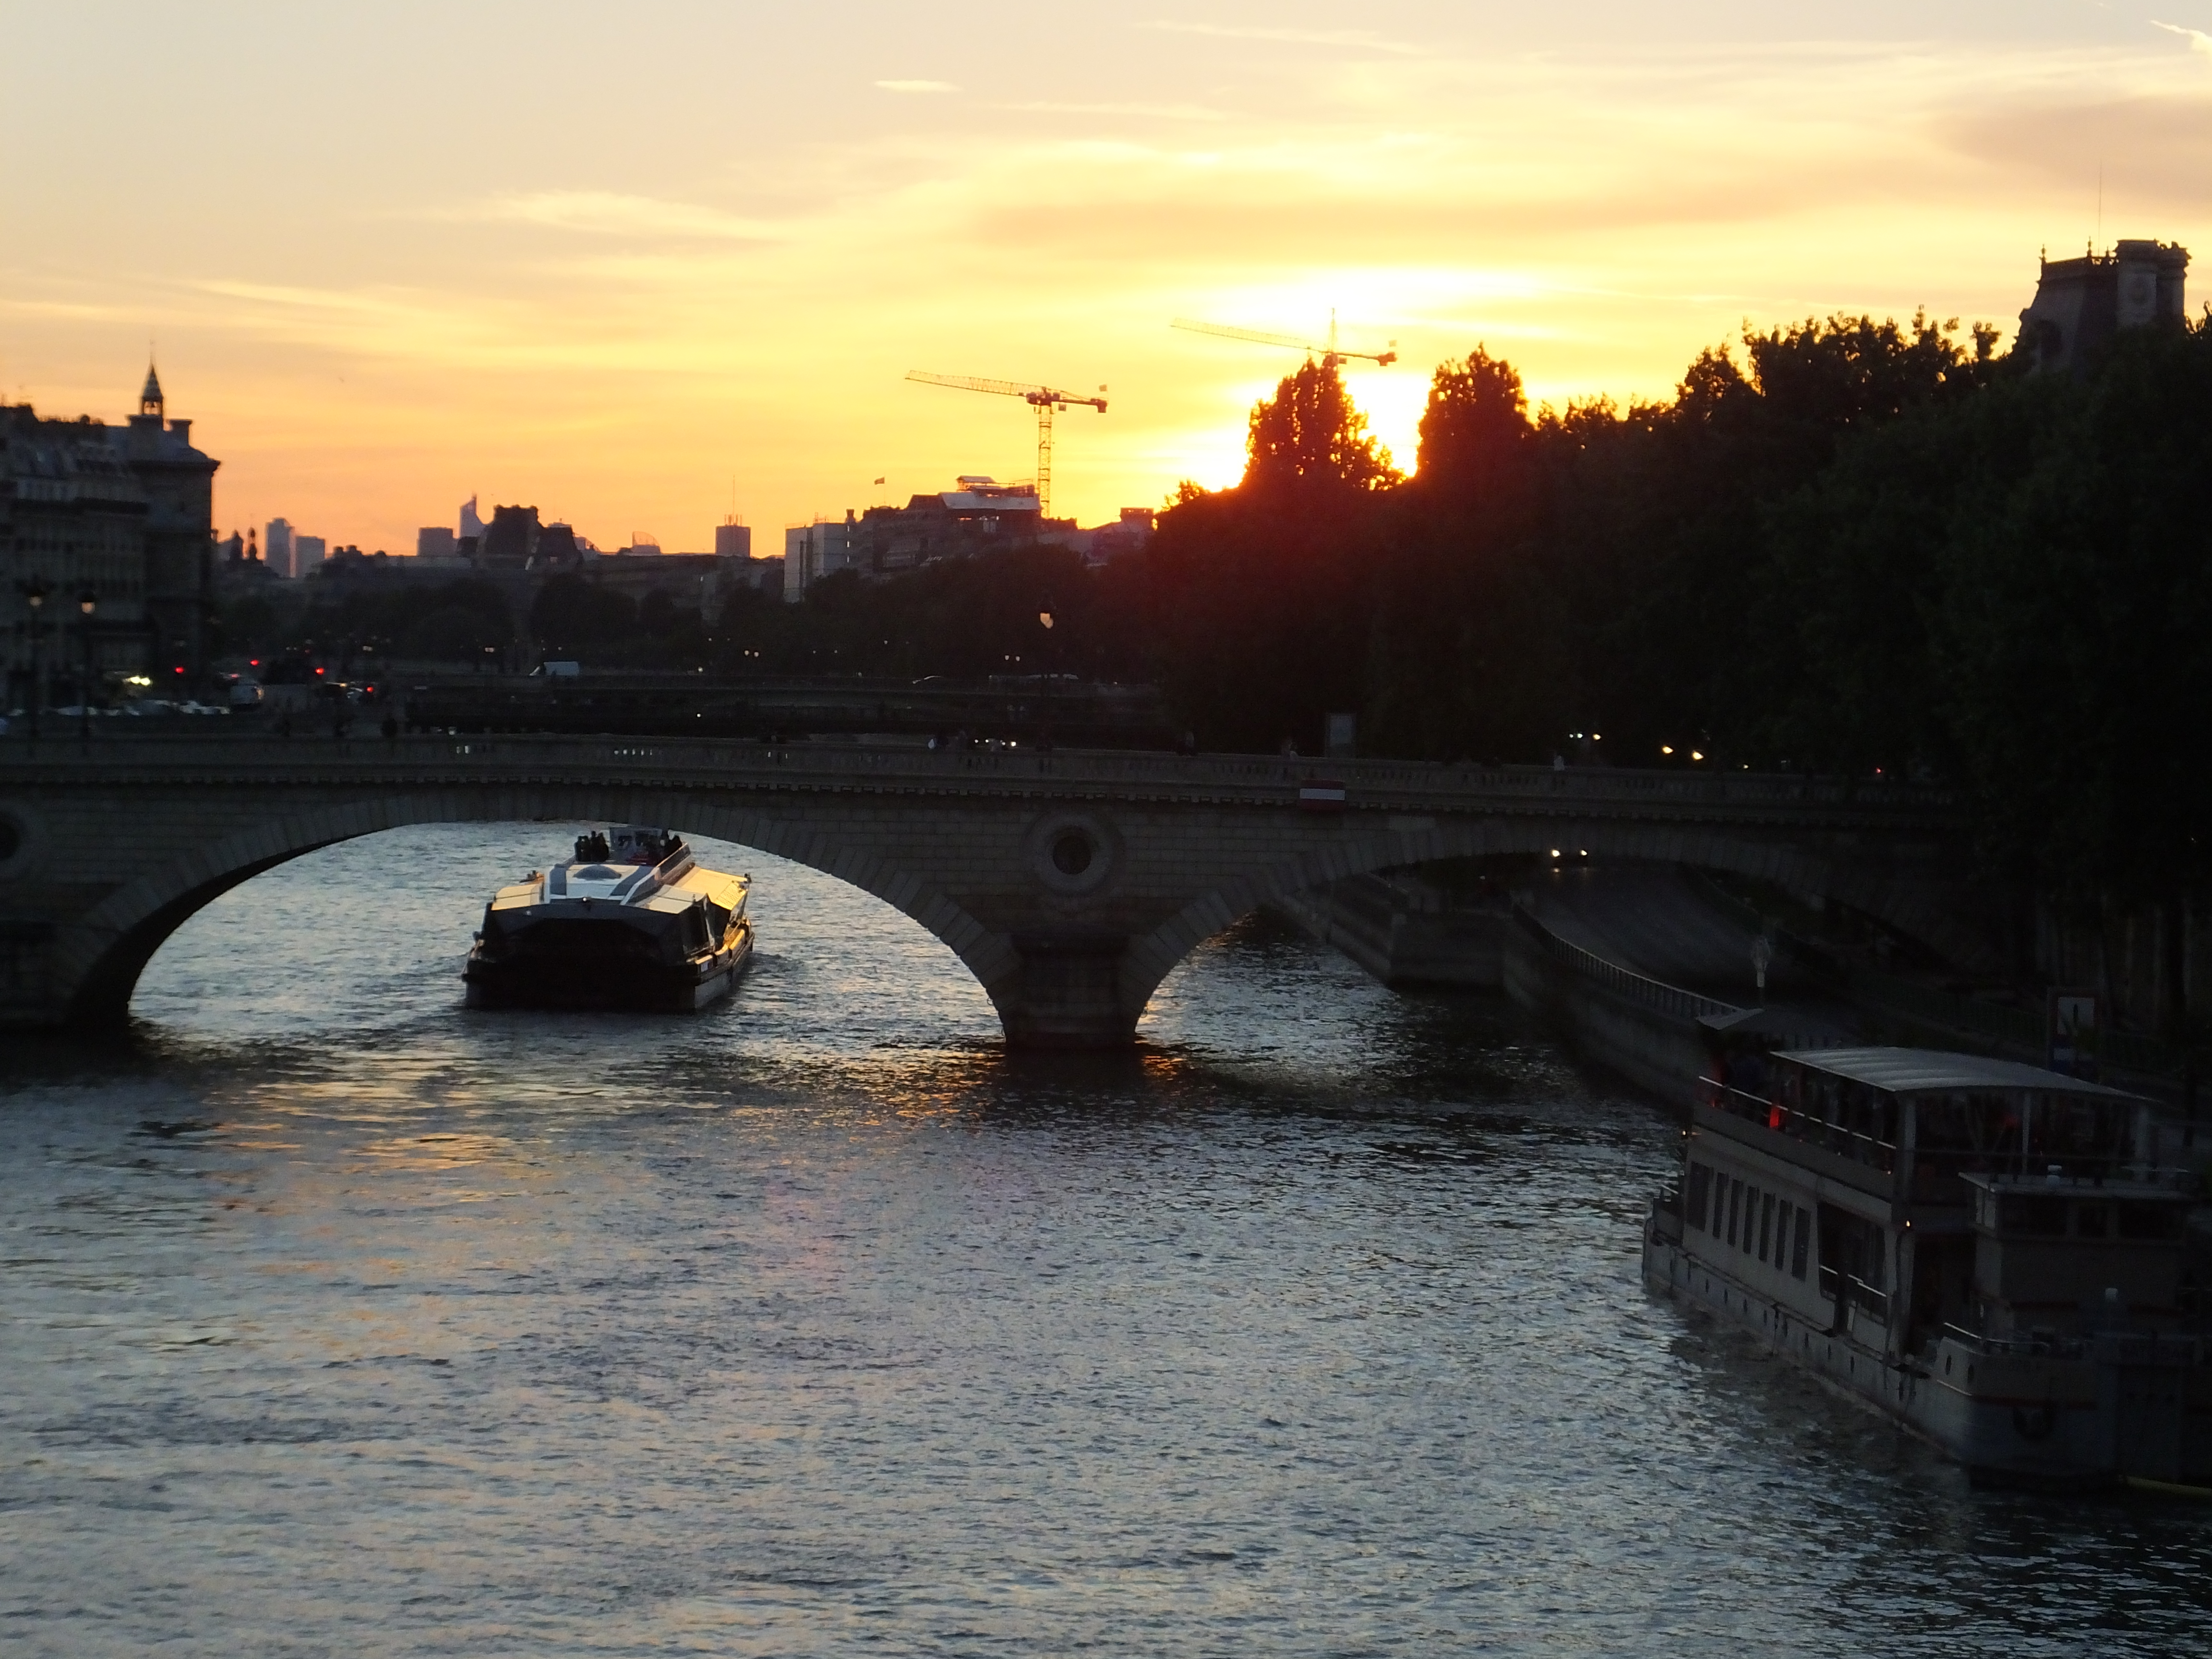 Sunset along the Seine